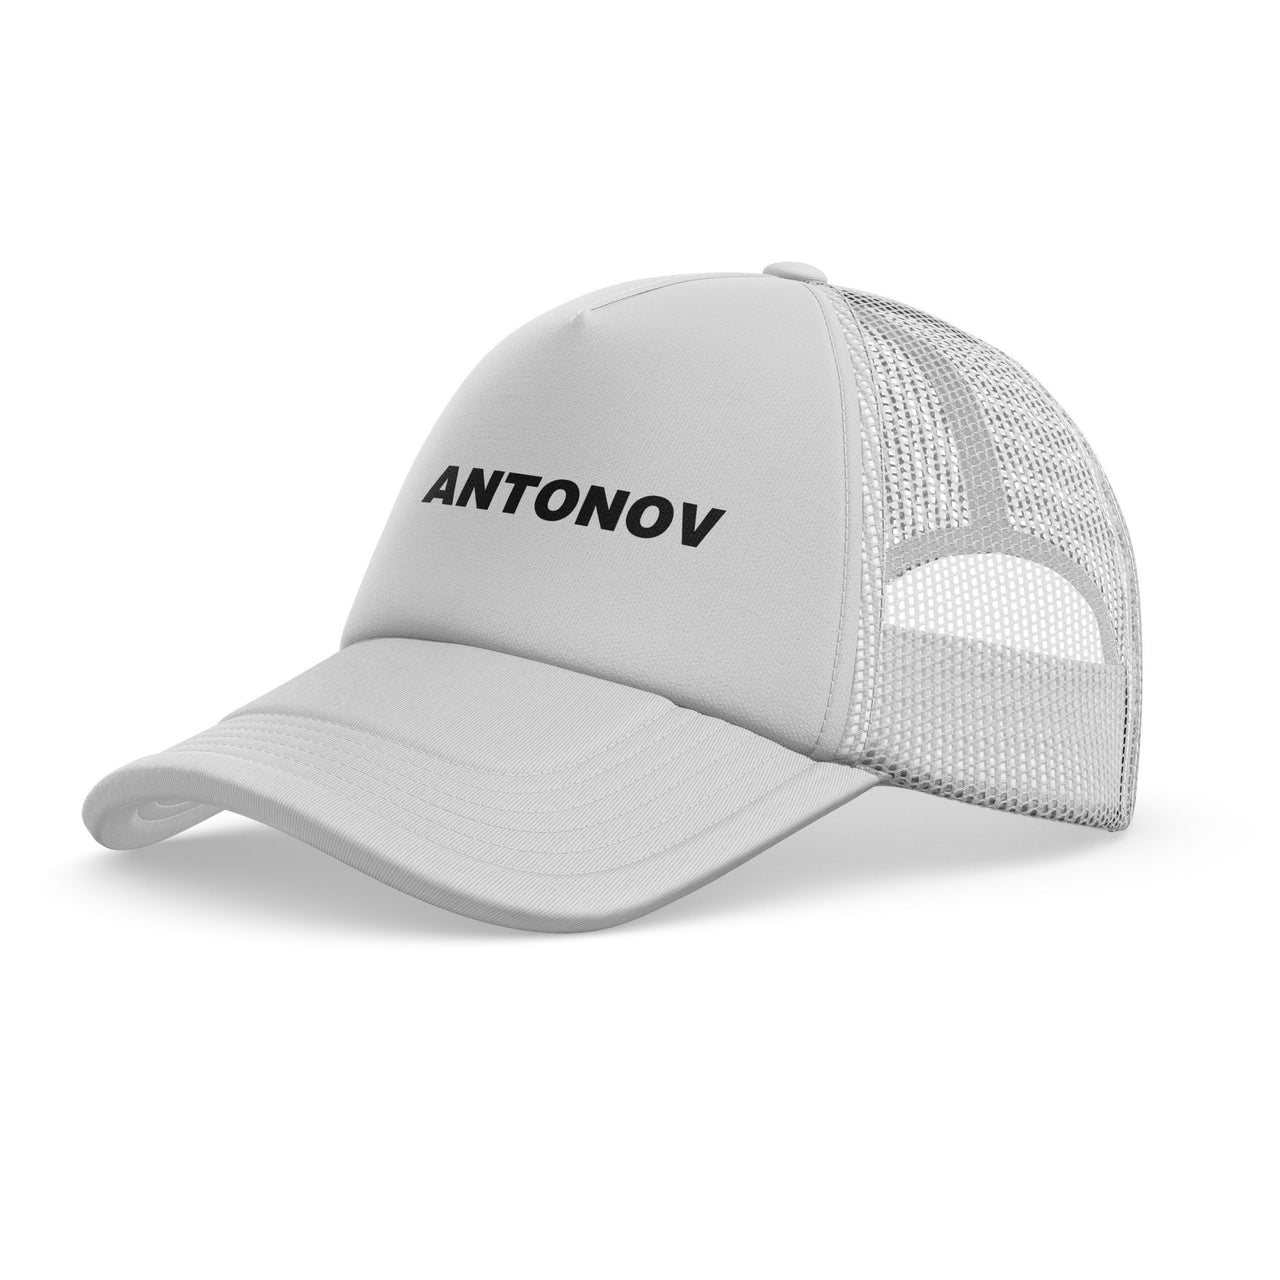 Antonov & Text Designed Trucker Caps & Hats